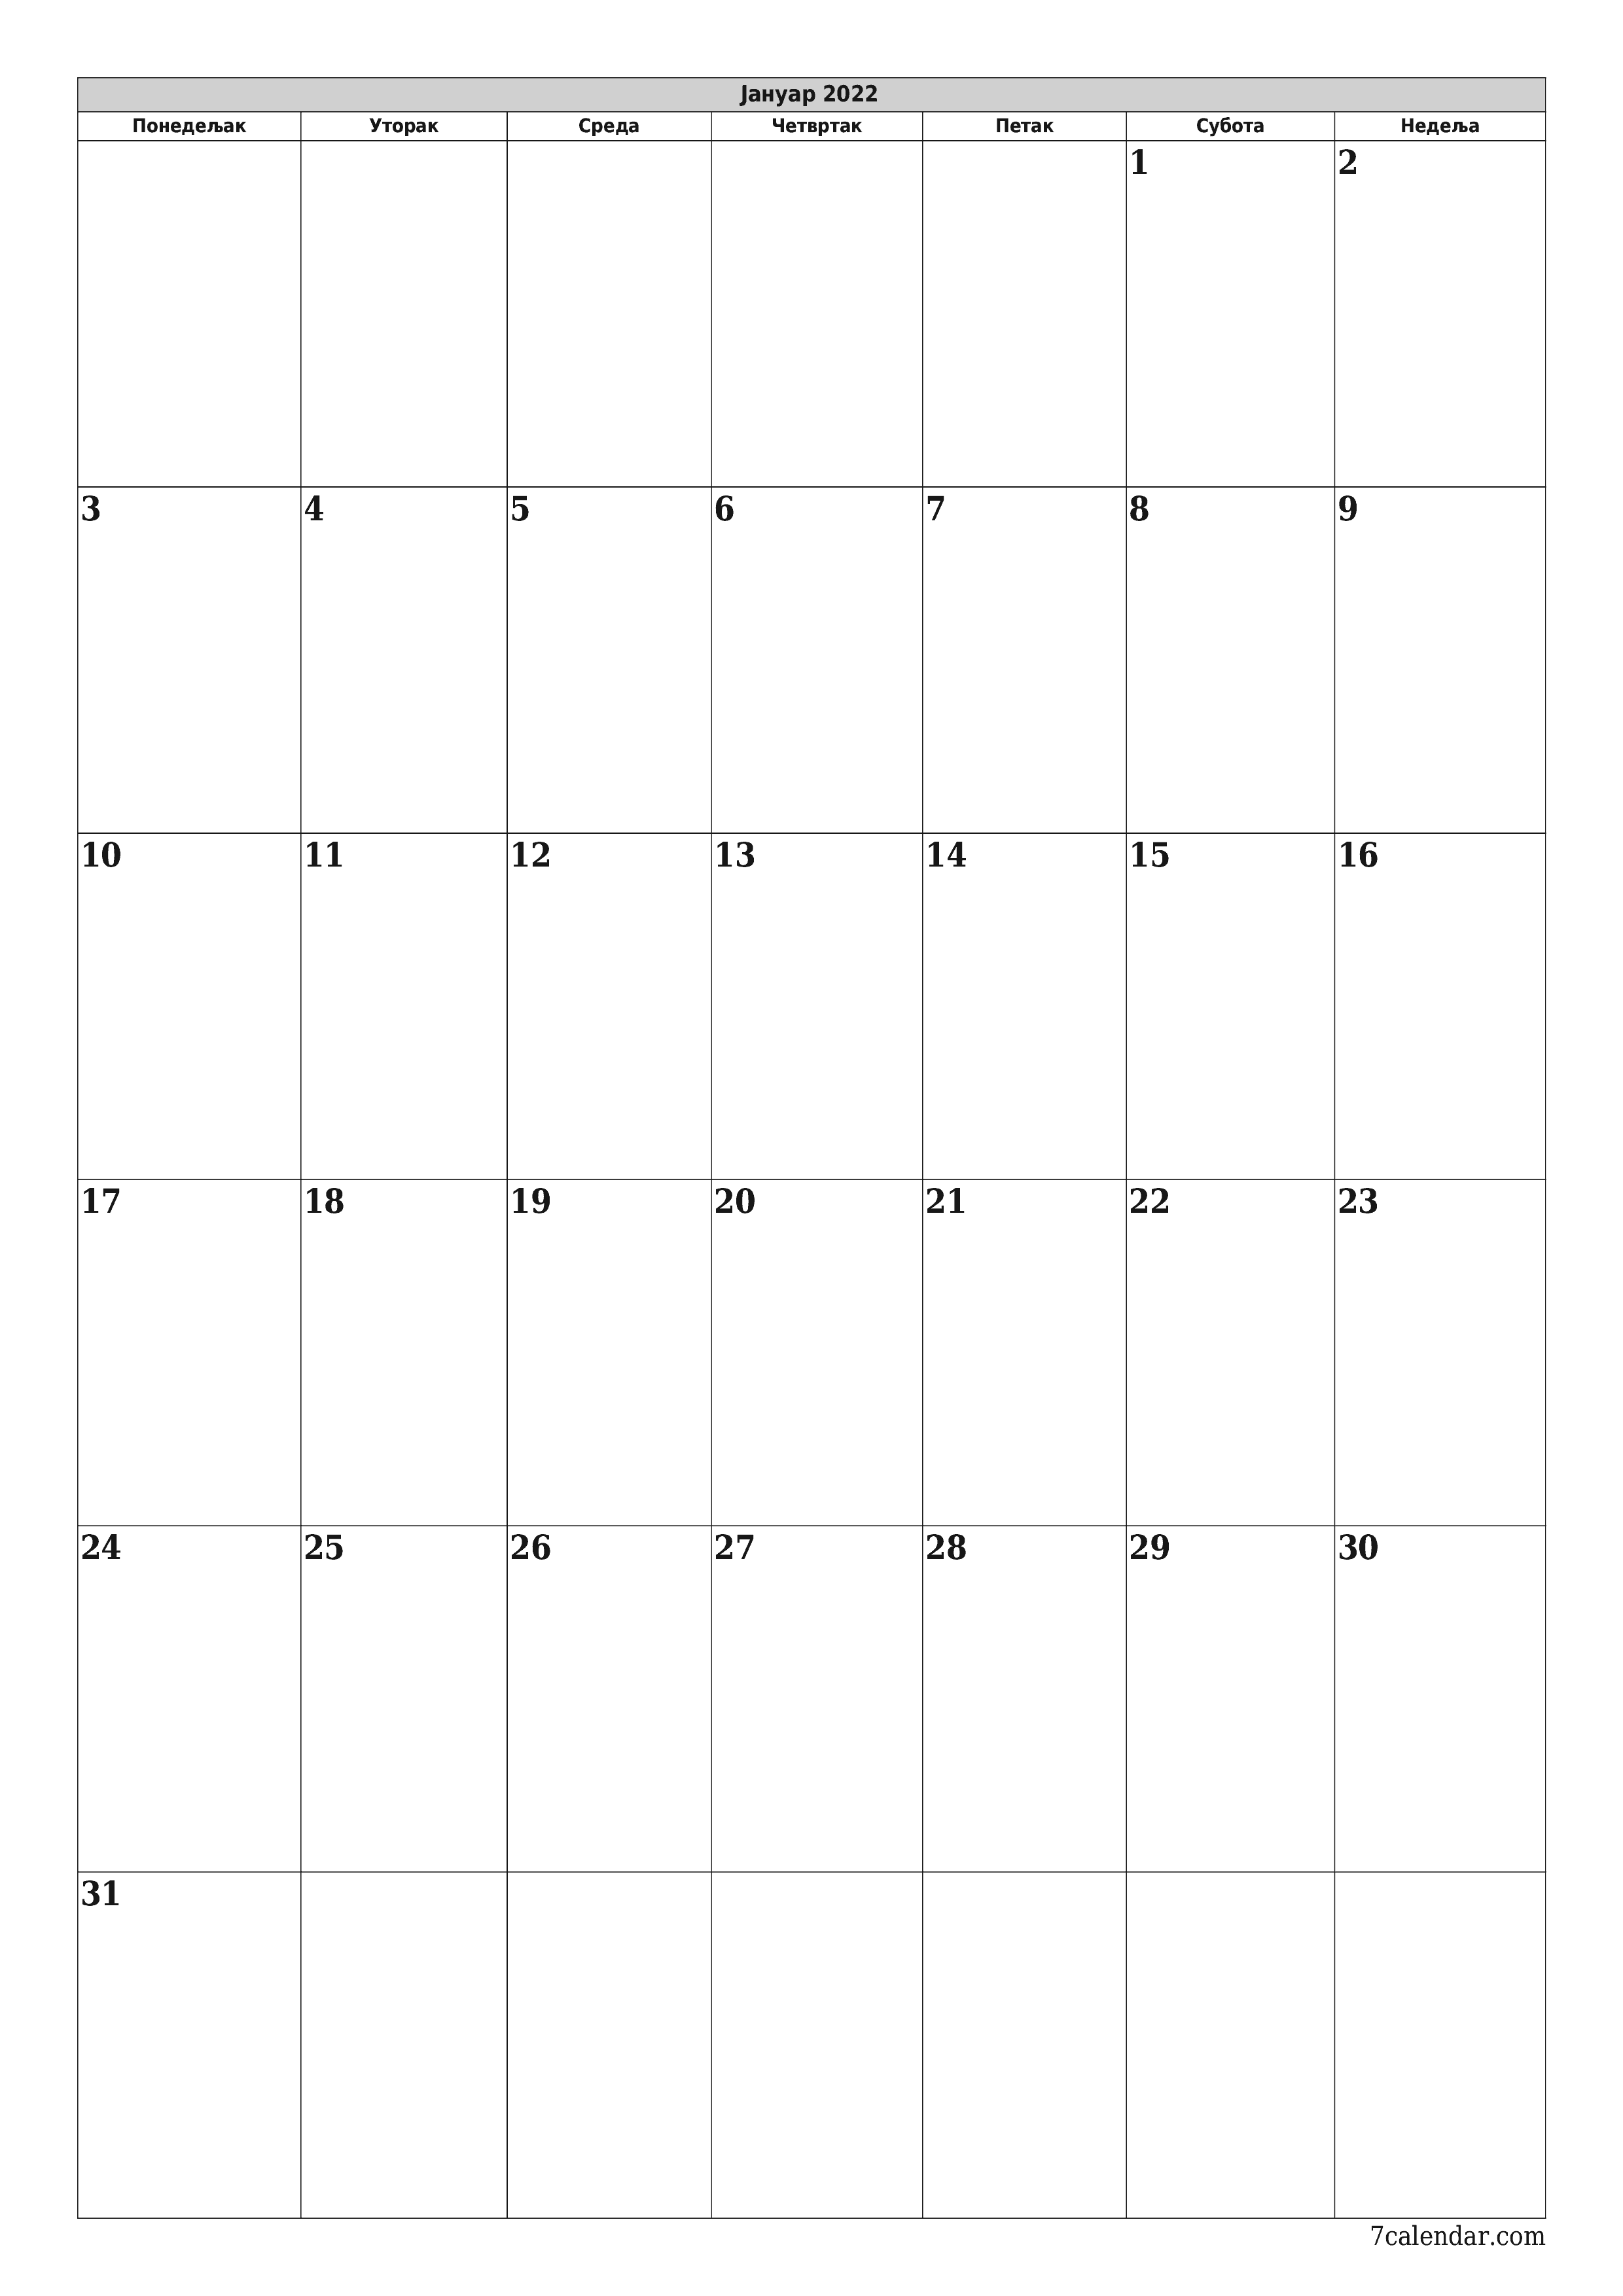  за штампање зидни шаблон а бесплатни вертикальниј Месечни планер календар Јануар (Јан) 2022